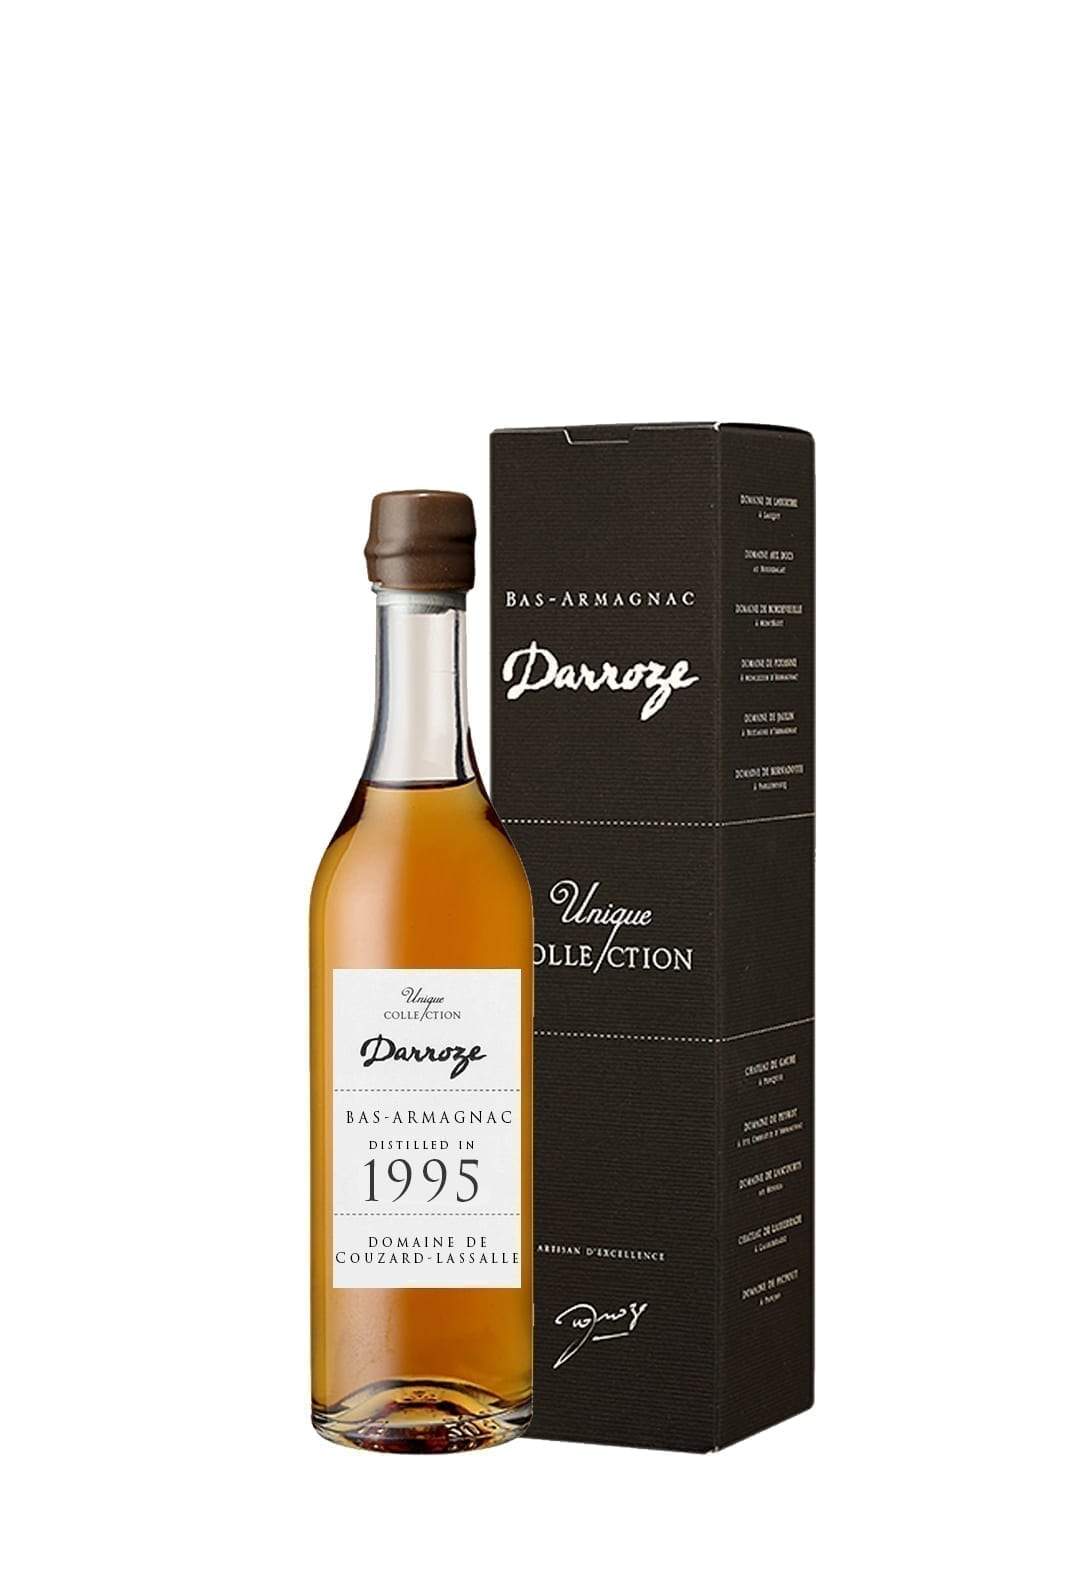 Darroze 1995 Couzard-Lassalle Grand Bas Armagnac 48.5% 200ml | Brandy | Shop online at Spirits of France